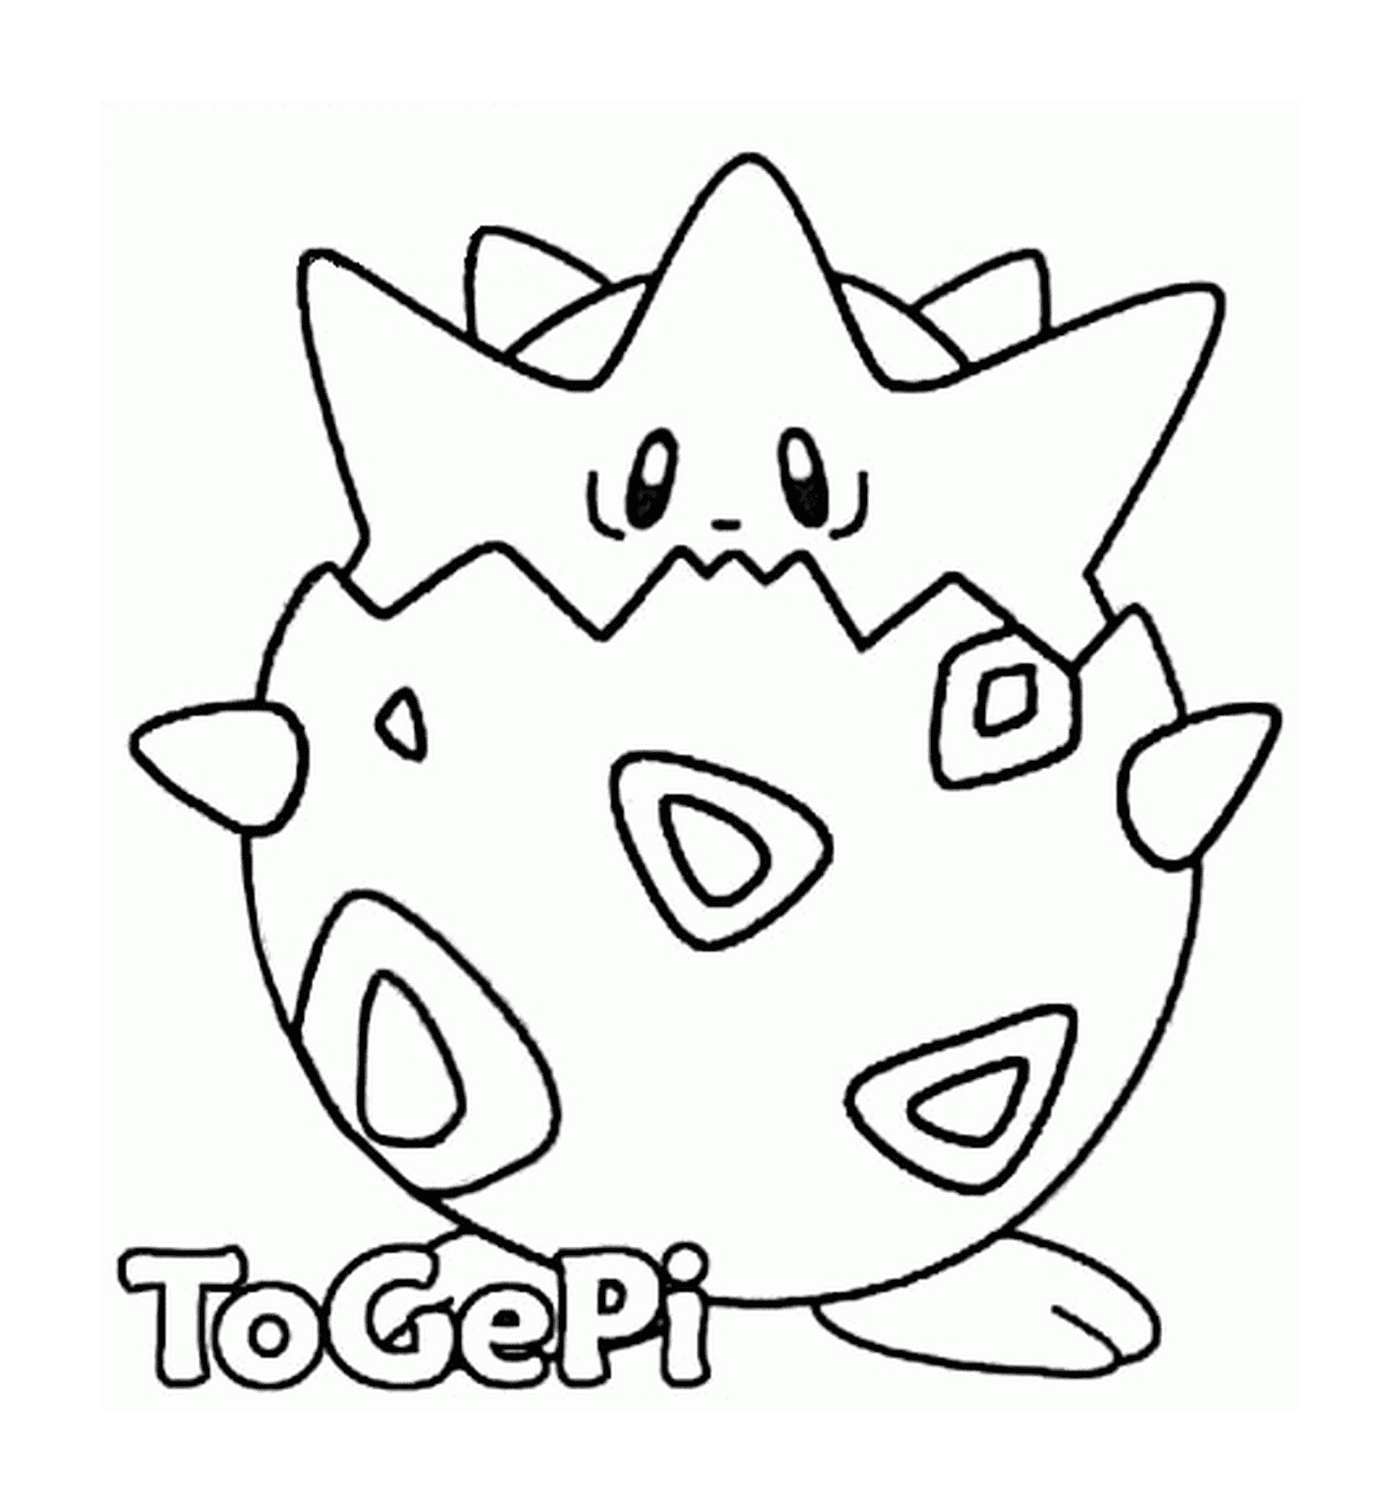 coloriage pokemon 175 Togepi